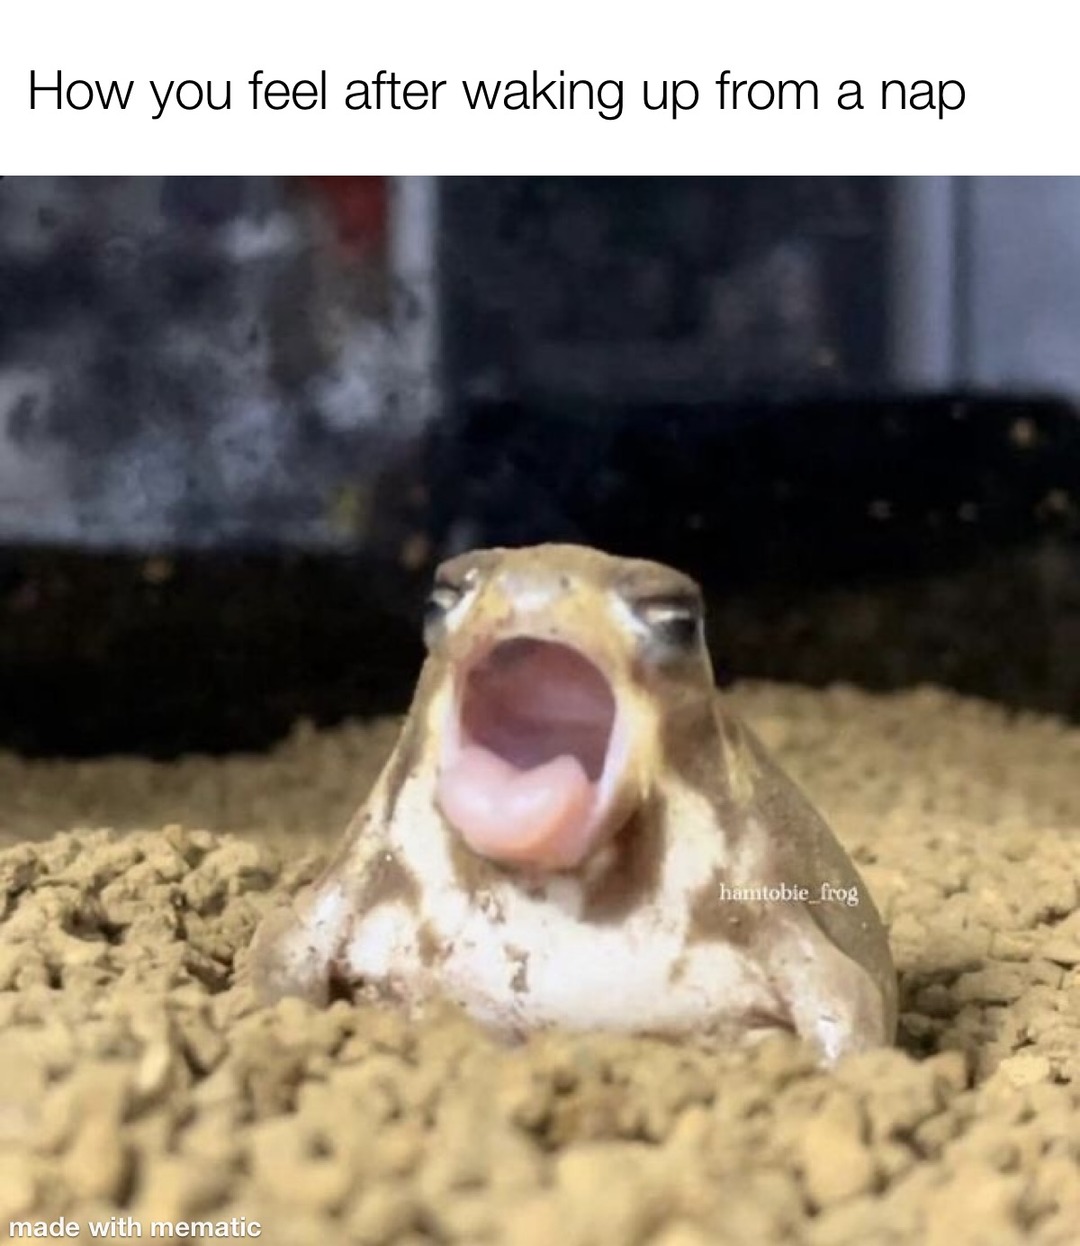 froggy nap - meme